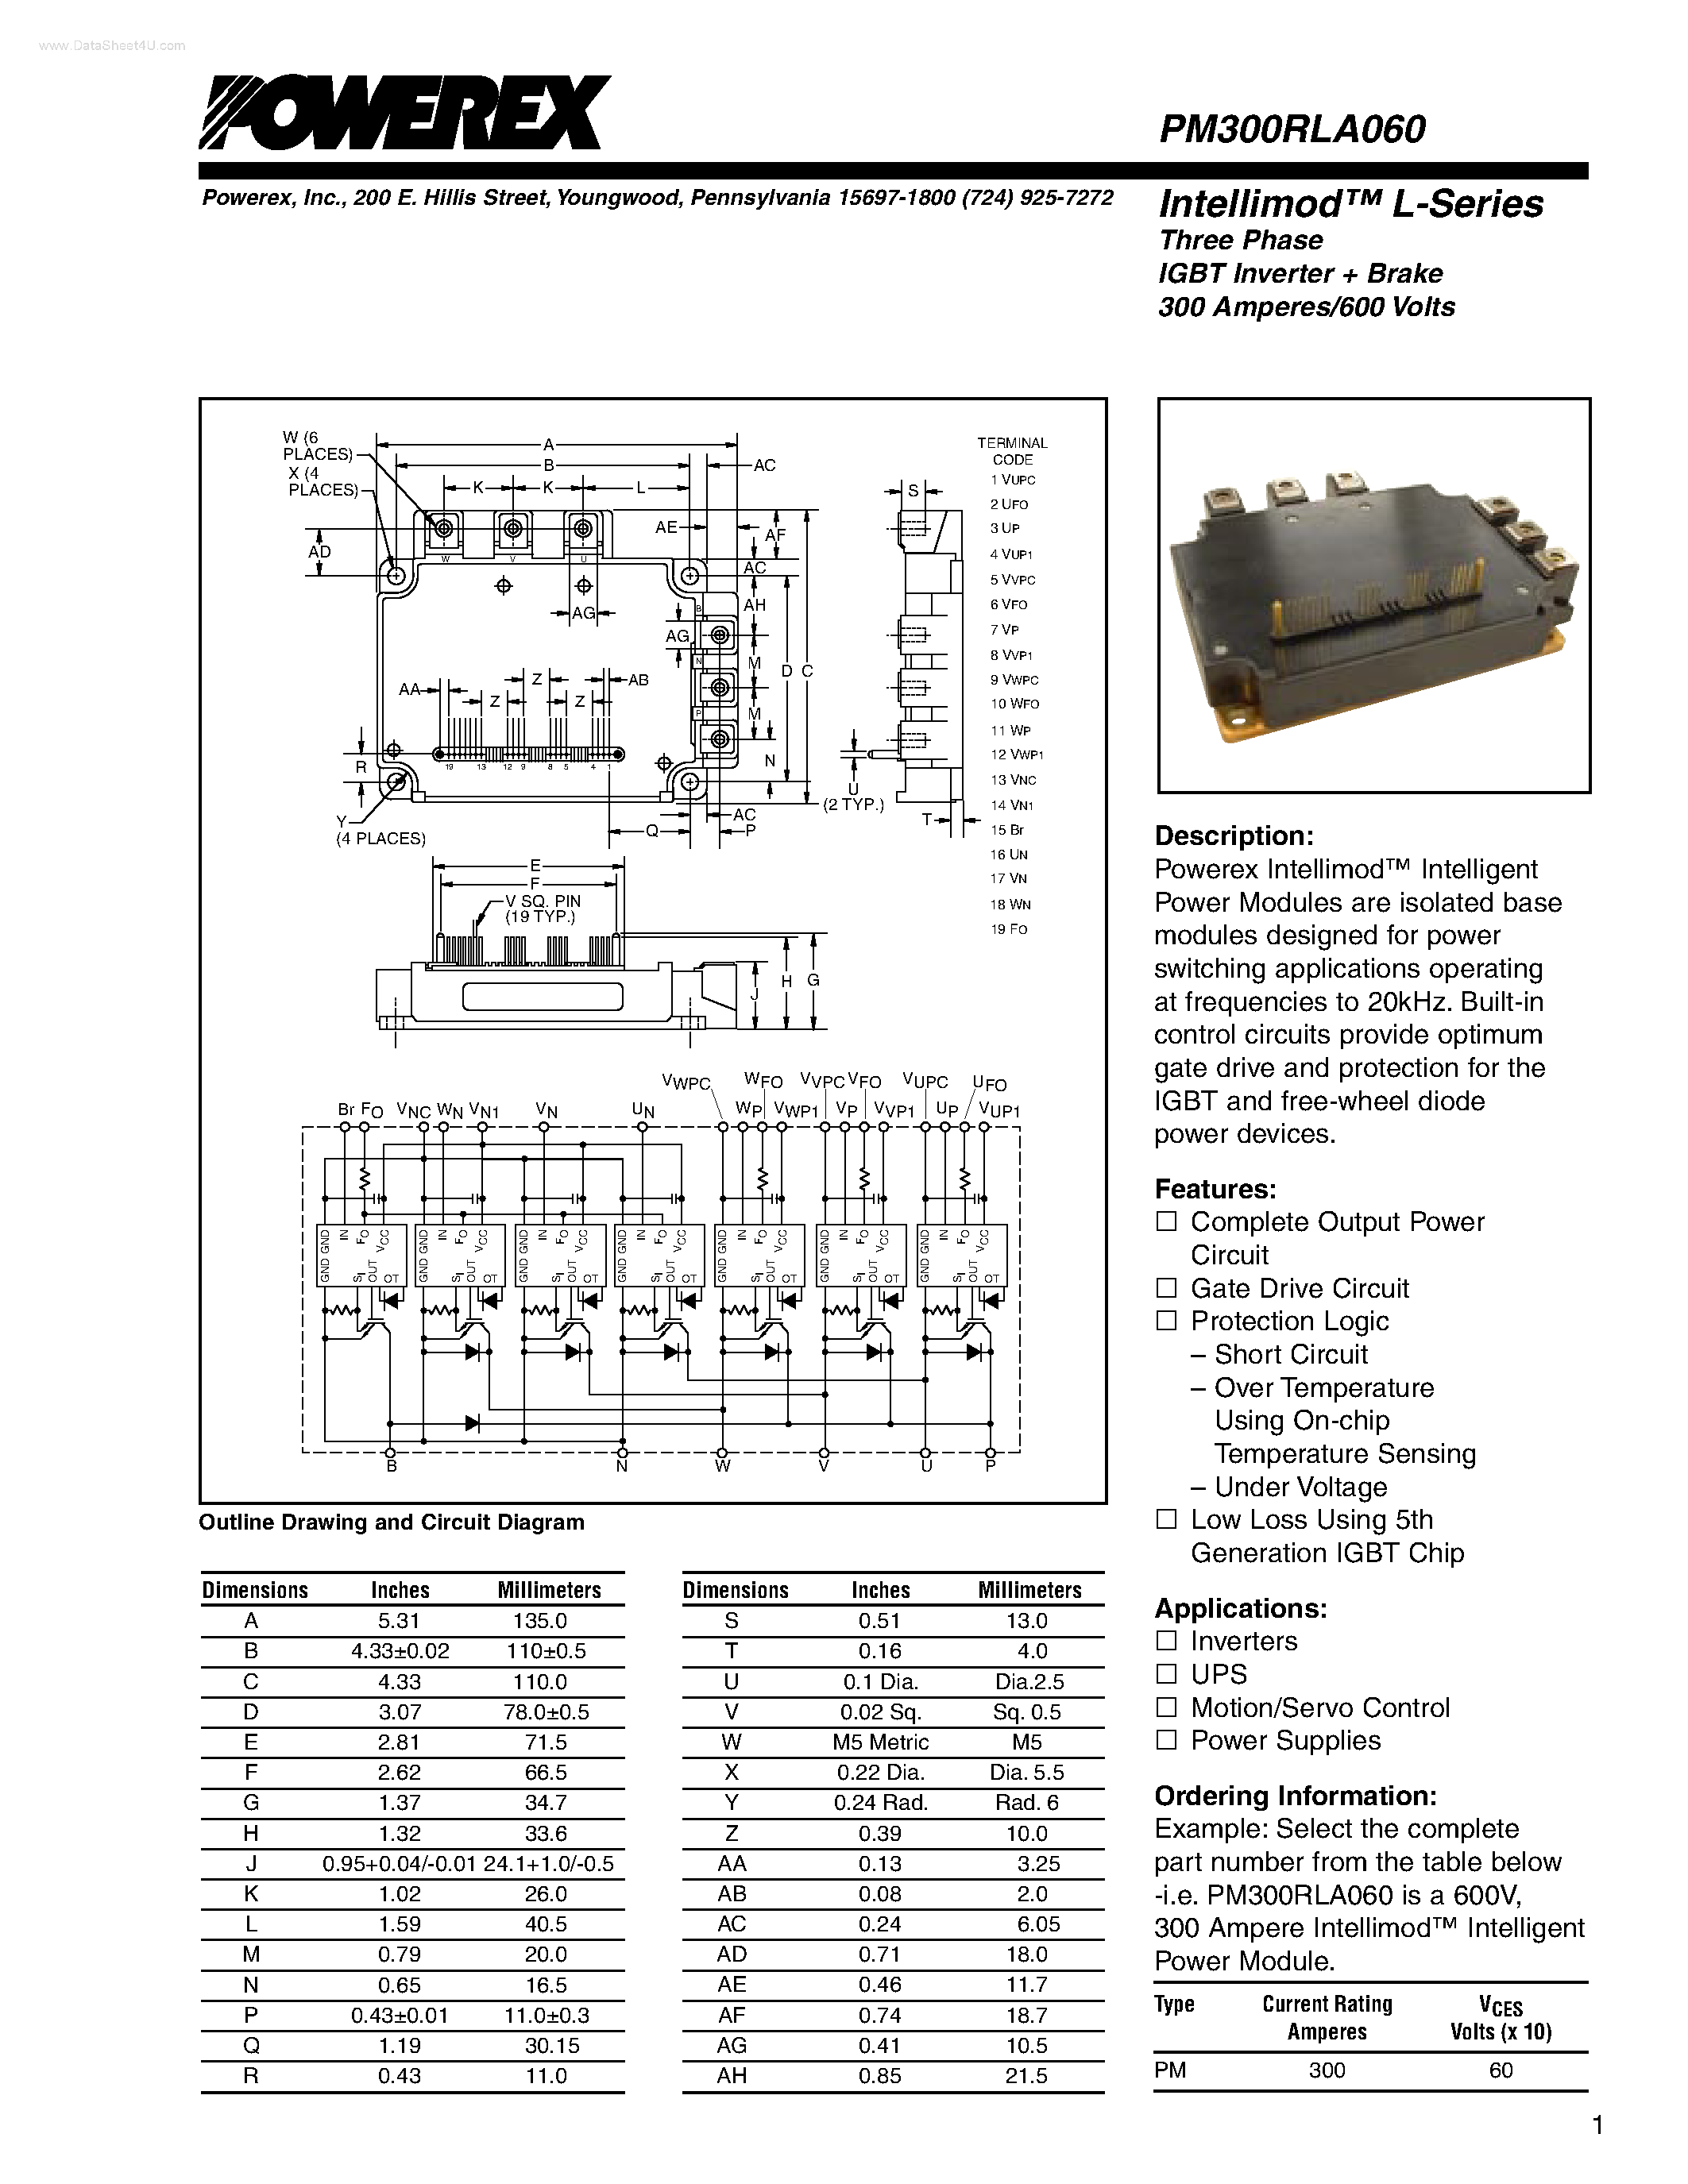 Даташит PM300RLA060 - Intellimod L-Series Three Phase IGBT Inverter + Brake страница 1